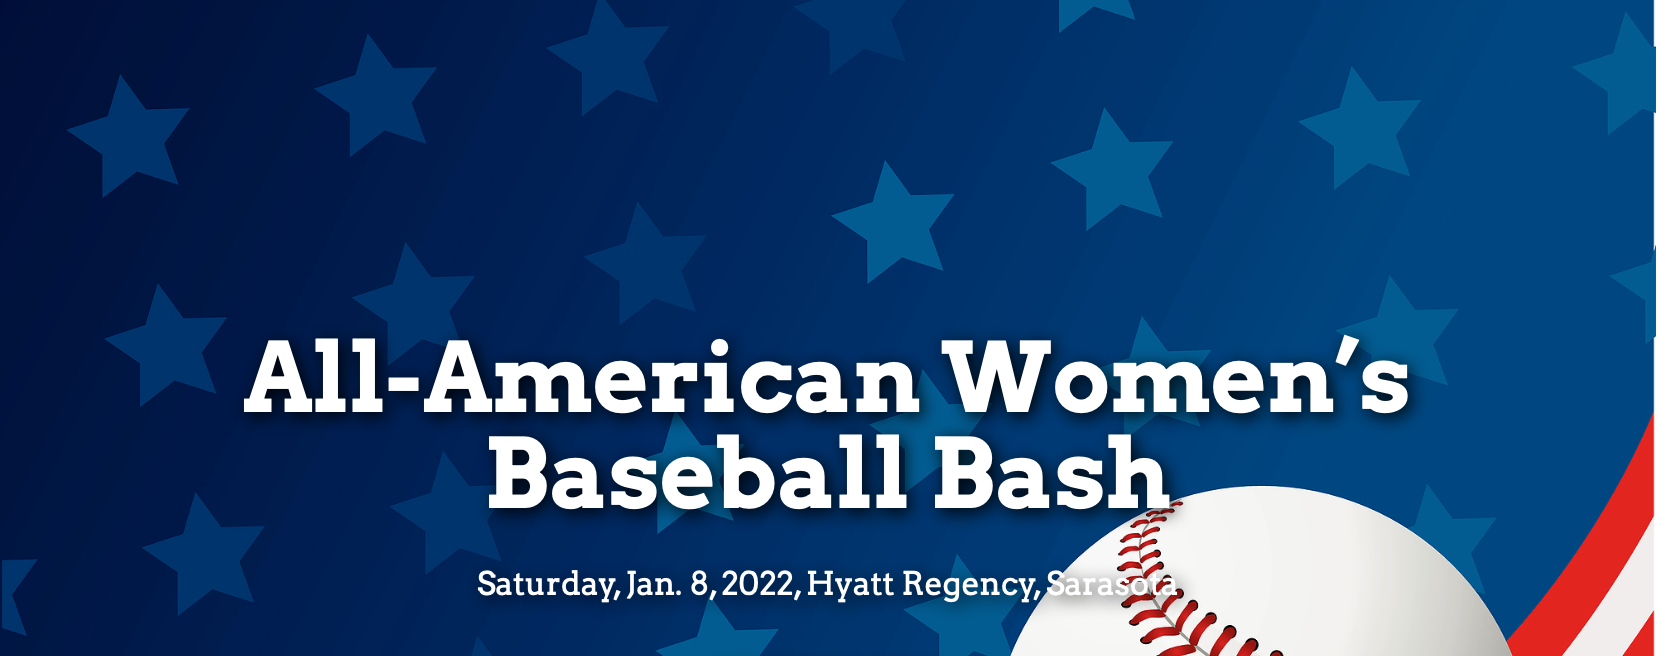 Jan. 8, 2022 All-American Women's Baseball Bash